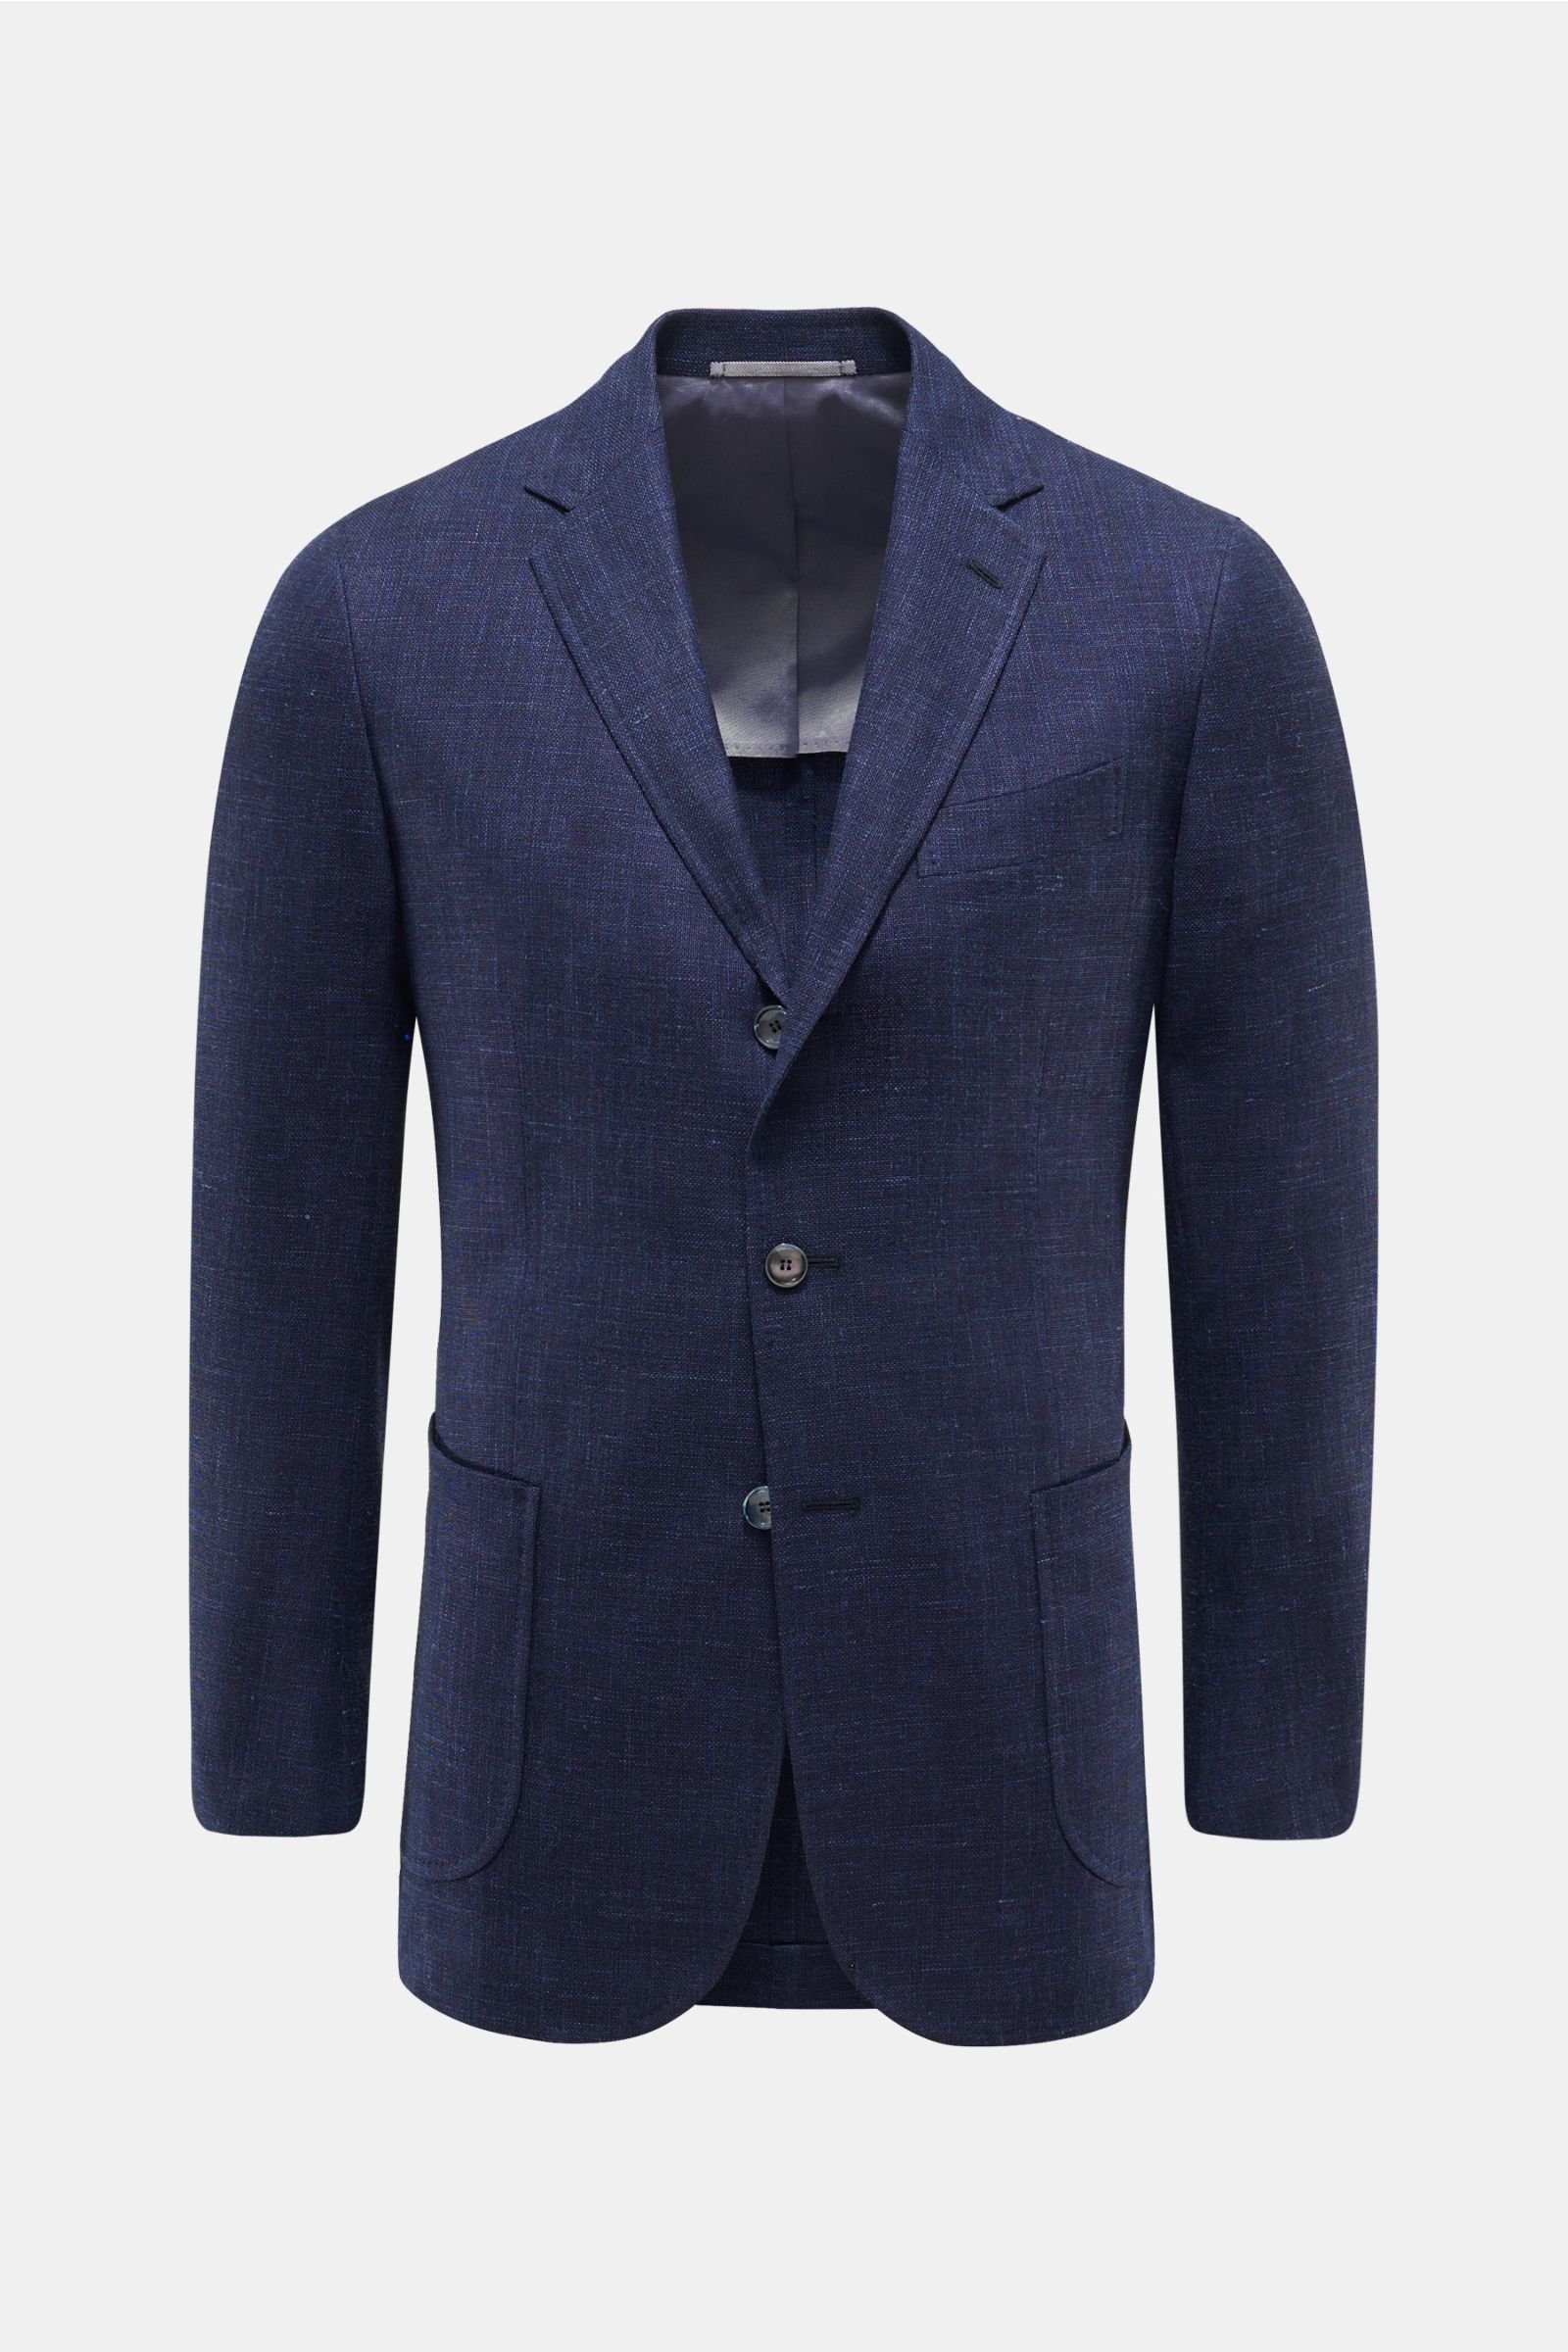 Smart-casual jacket 'Aldo' dark blue